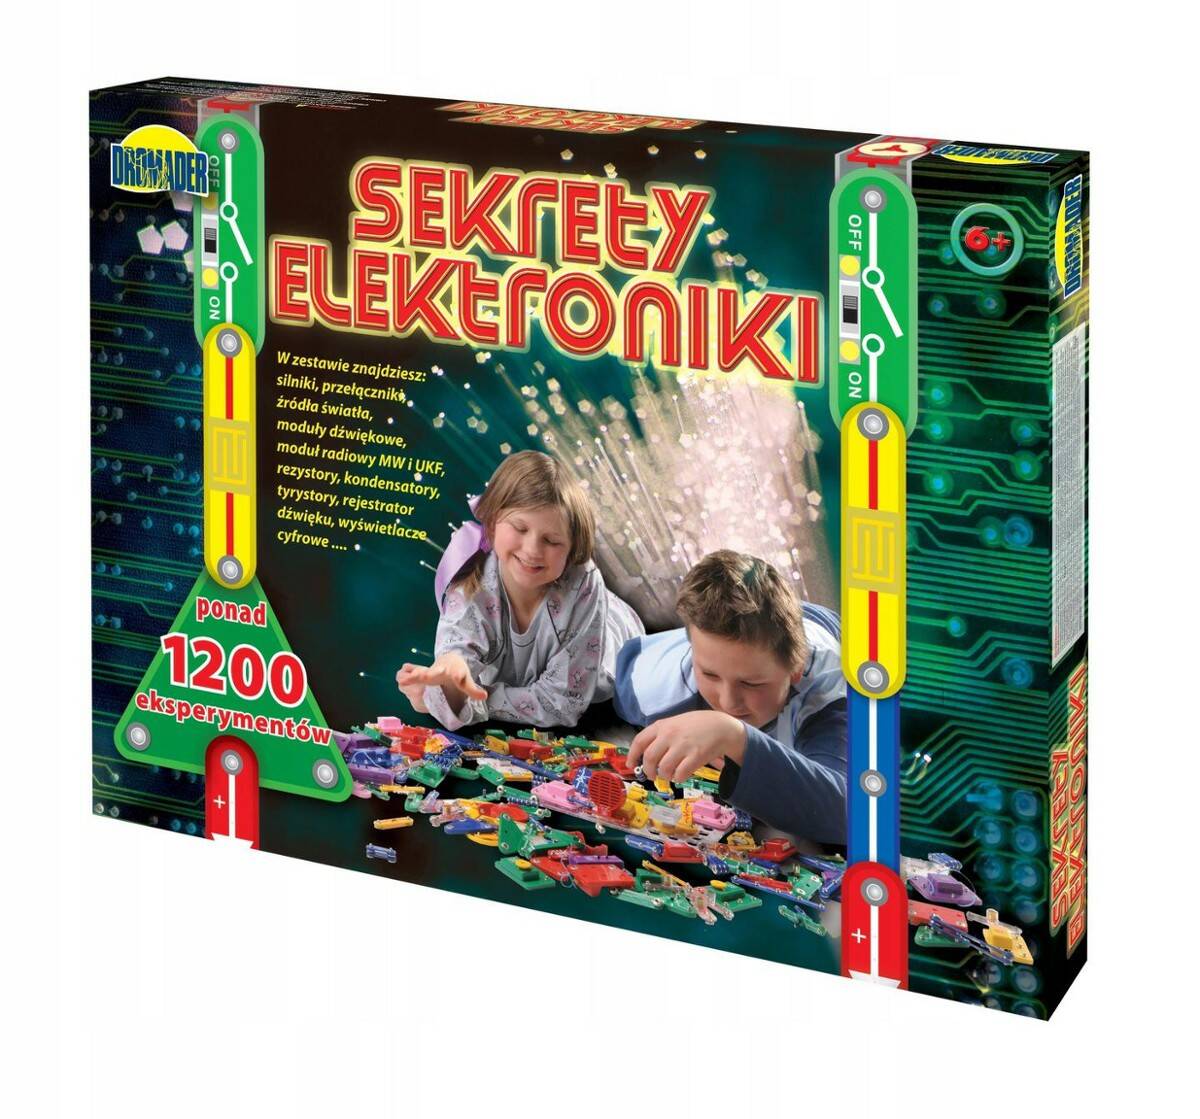 SEKRETY ELEKTRONIKI 1288 1200 EKSP 9537